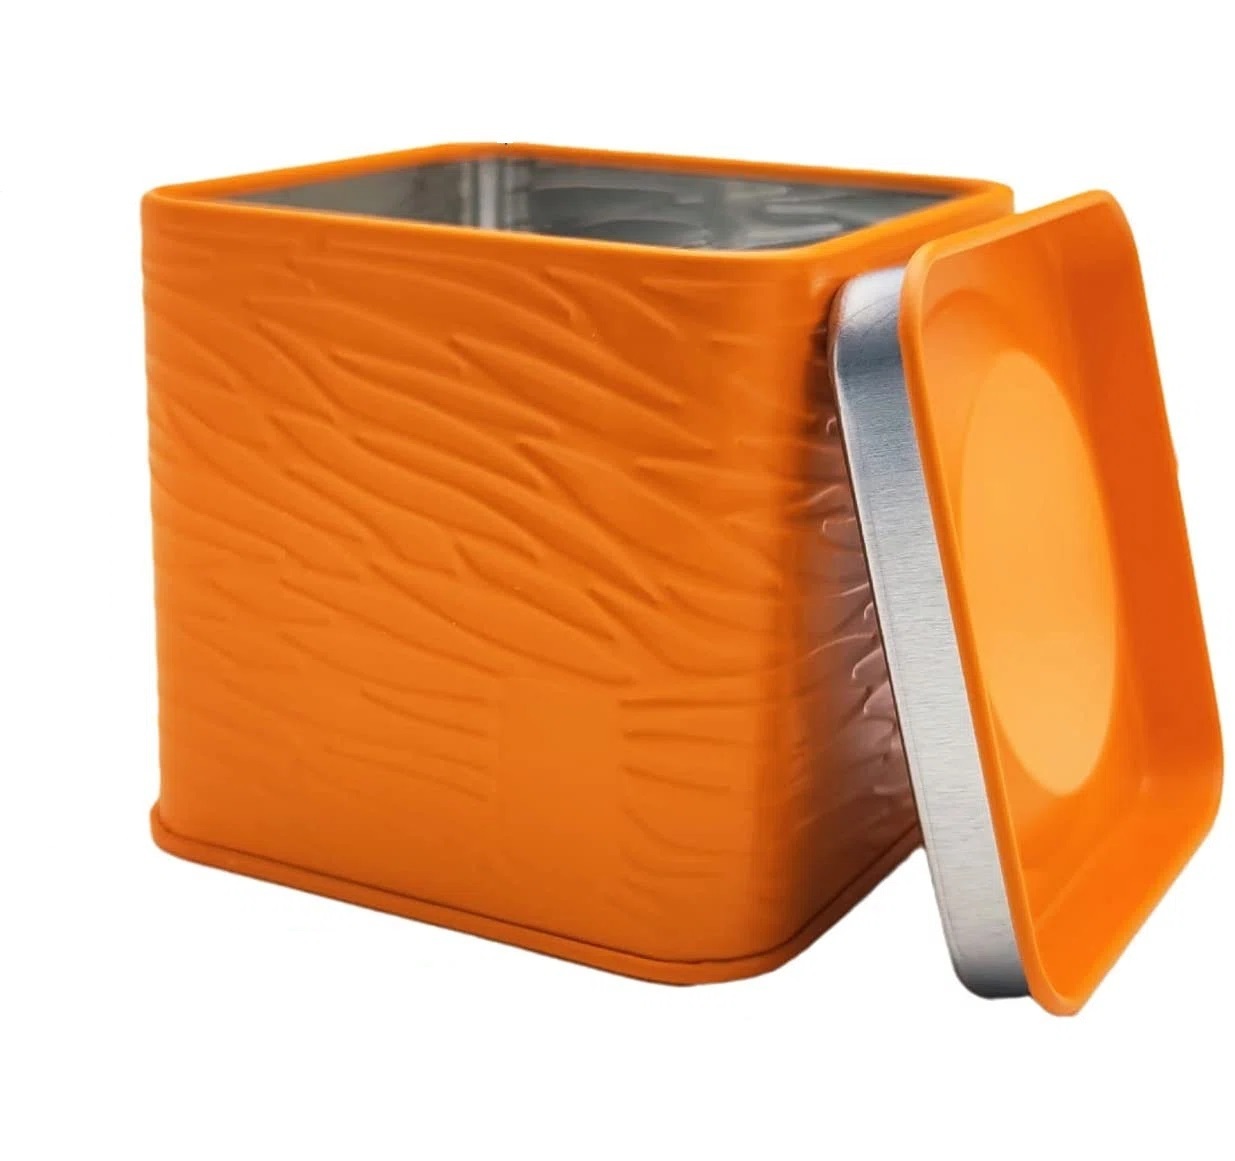 Square orange kitchen canister